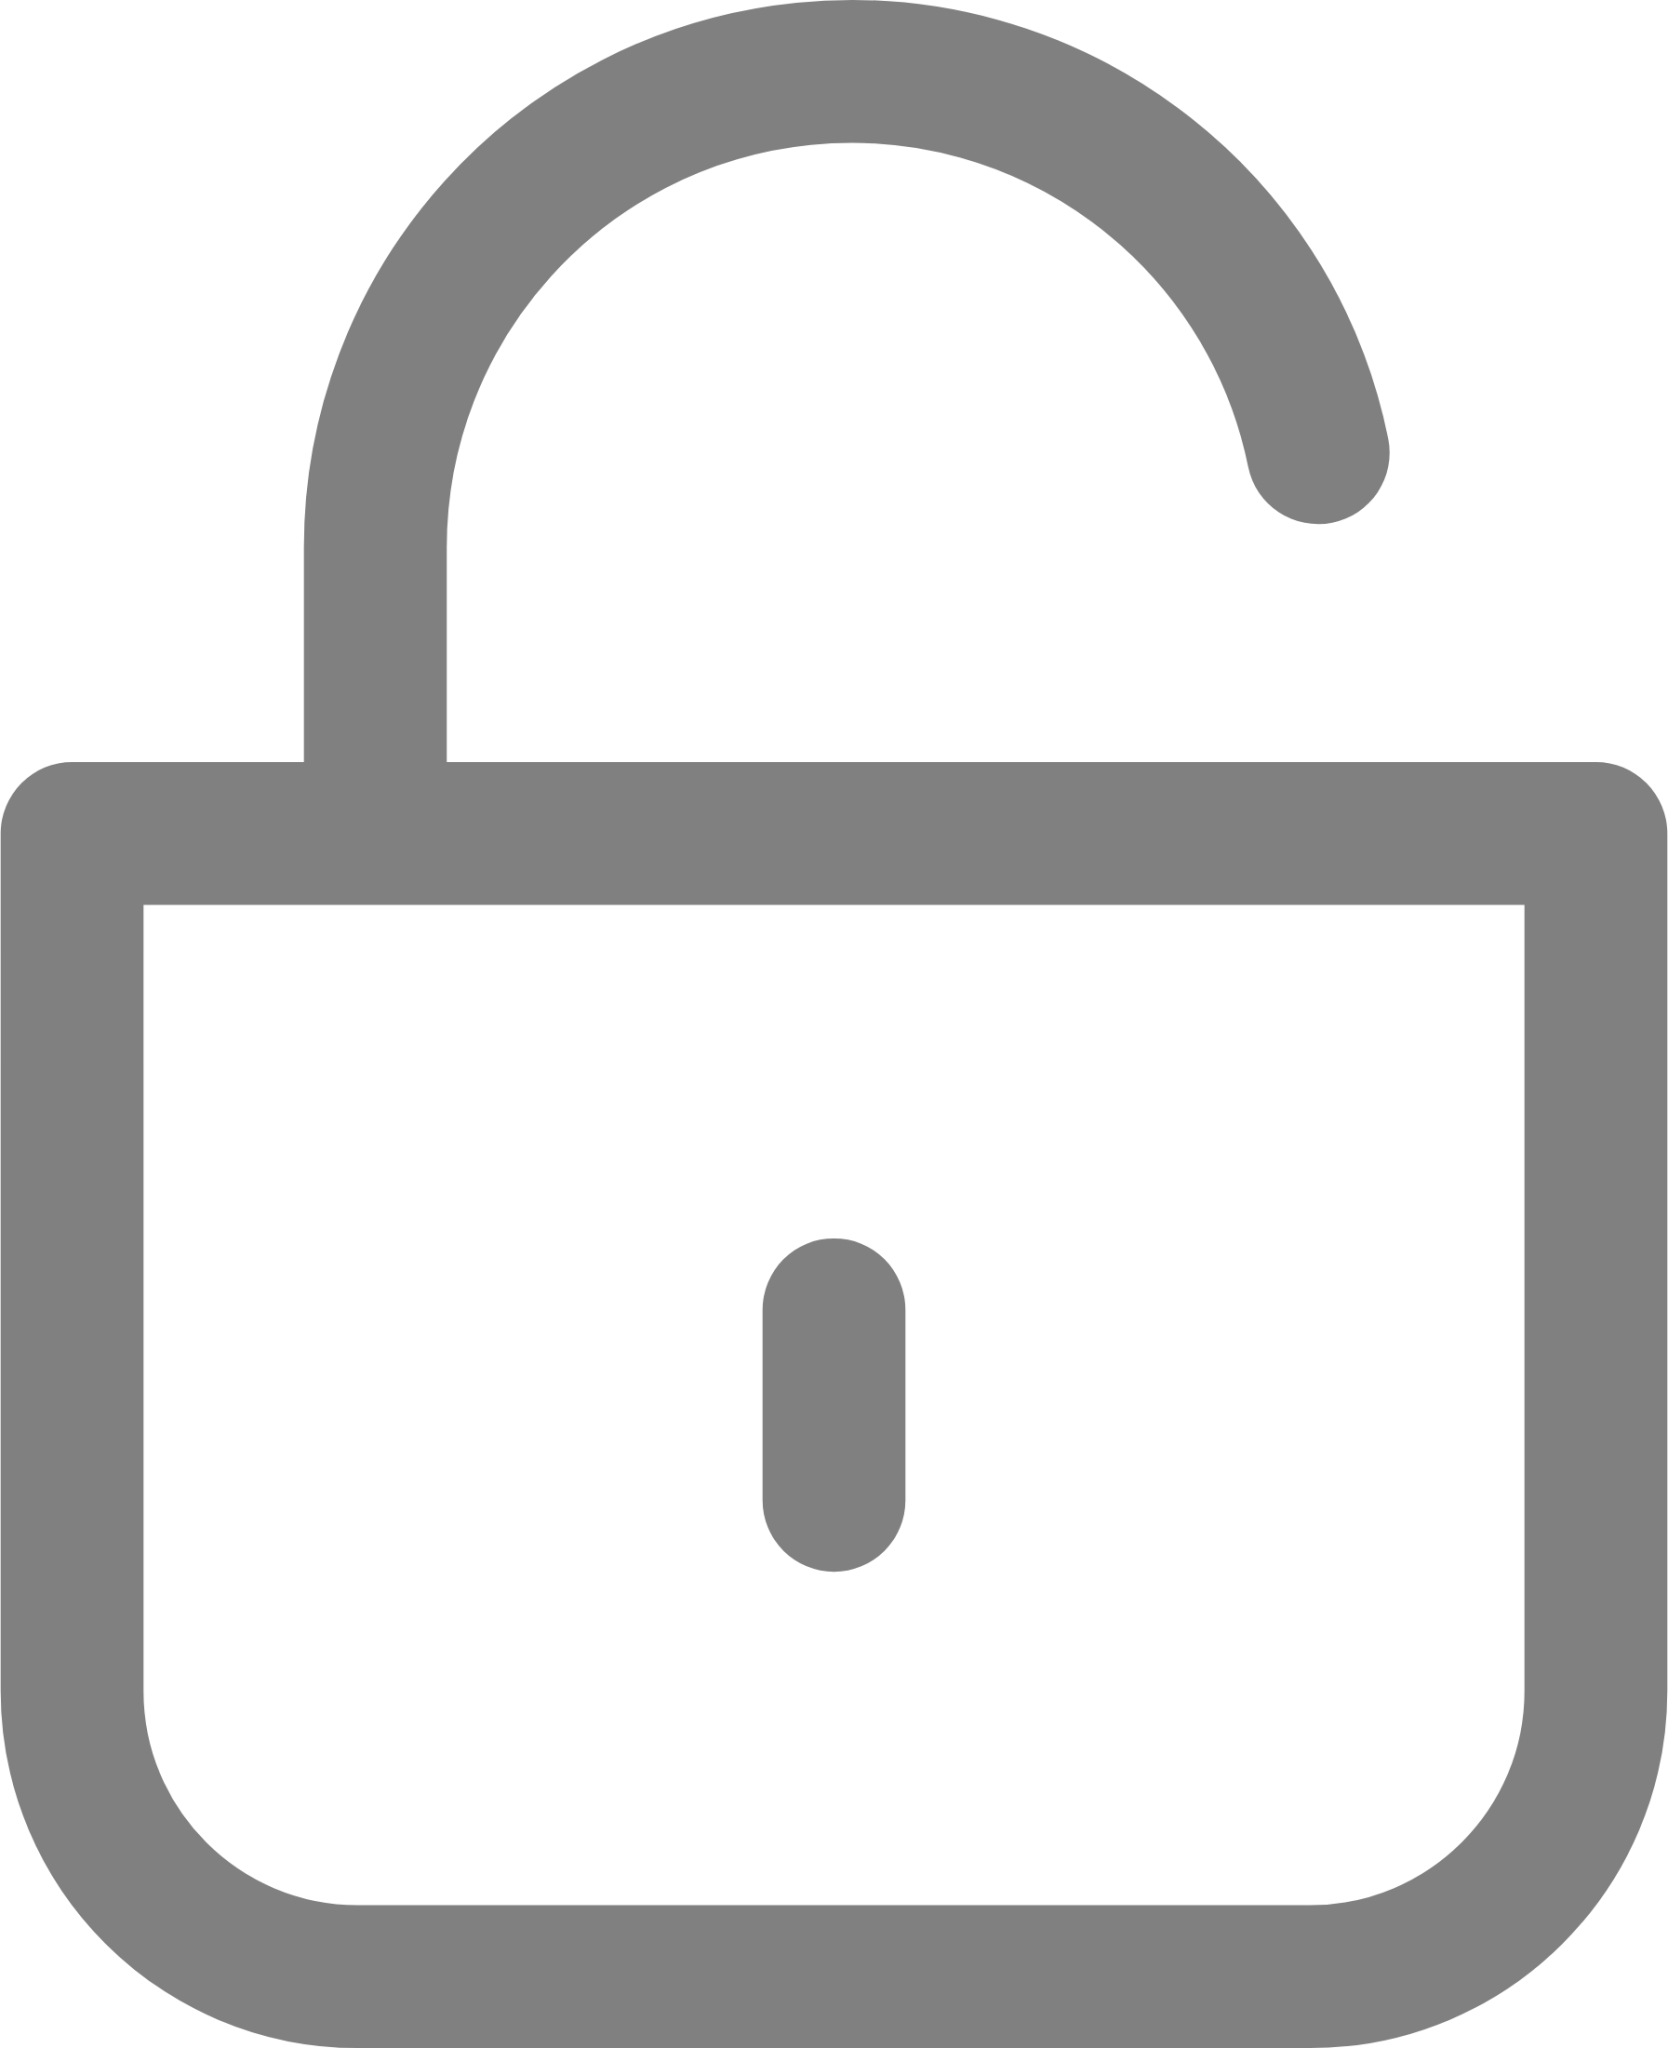 lock unlock 1 icon